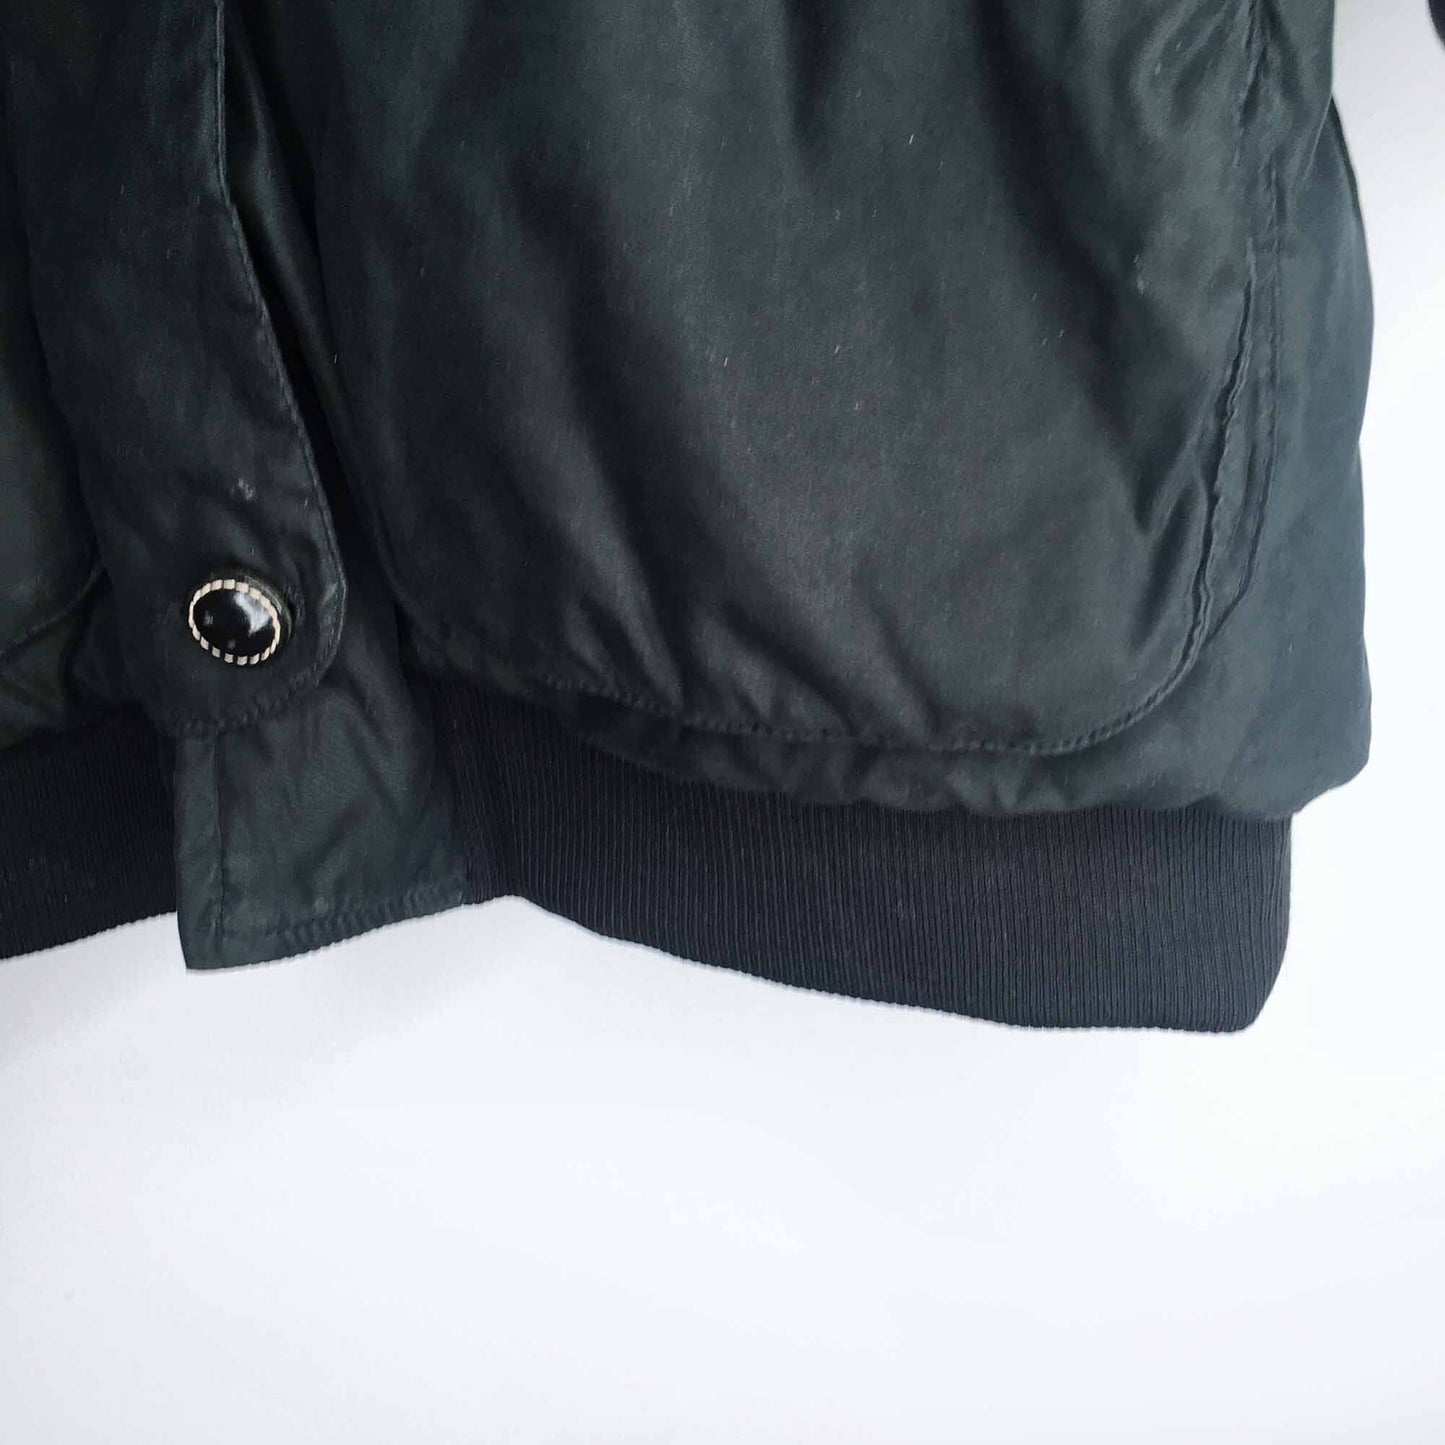 Vintage Max Mara puff jacket with fur collar - size 8